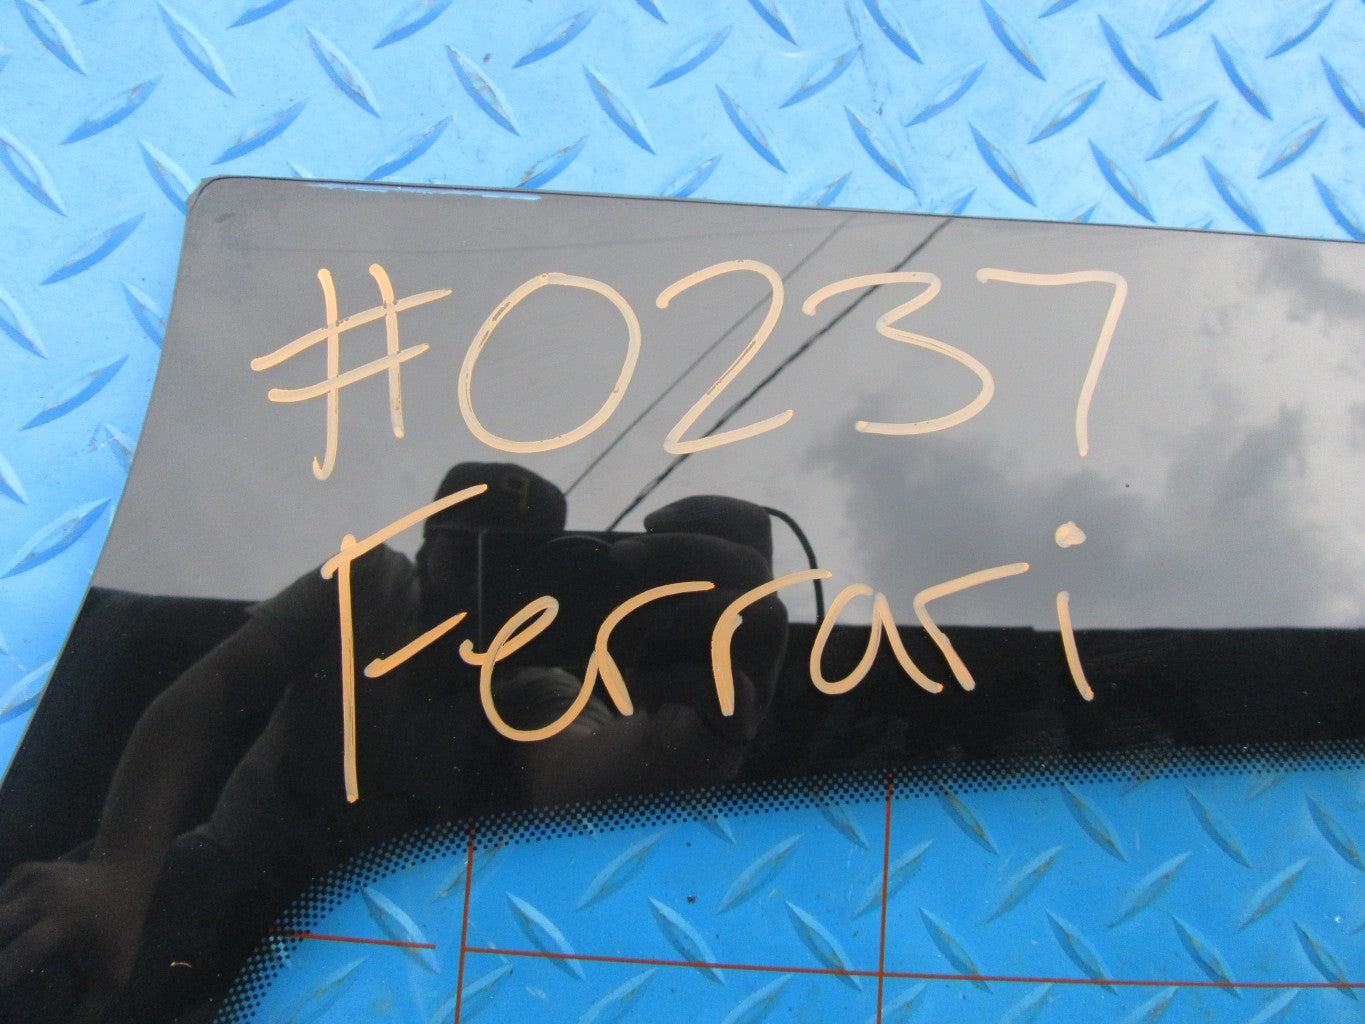 Ferrari 812 Superfast rear back glass backglass #0237